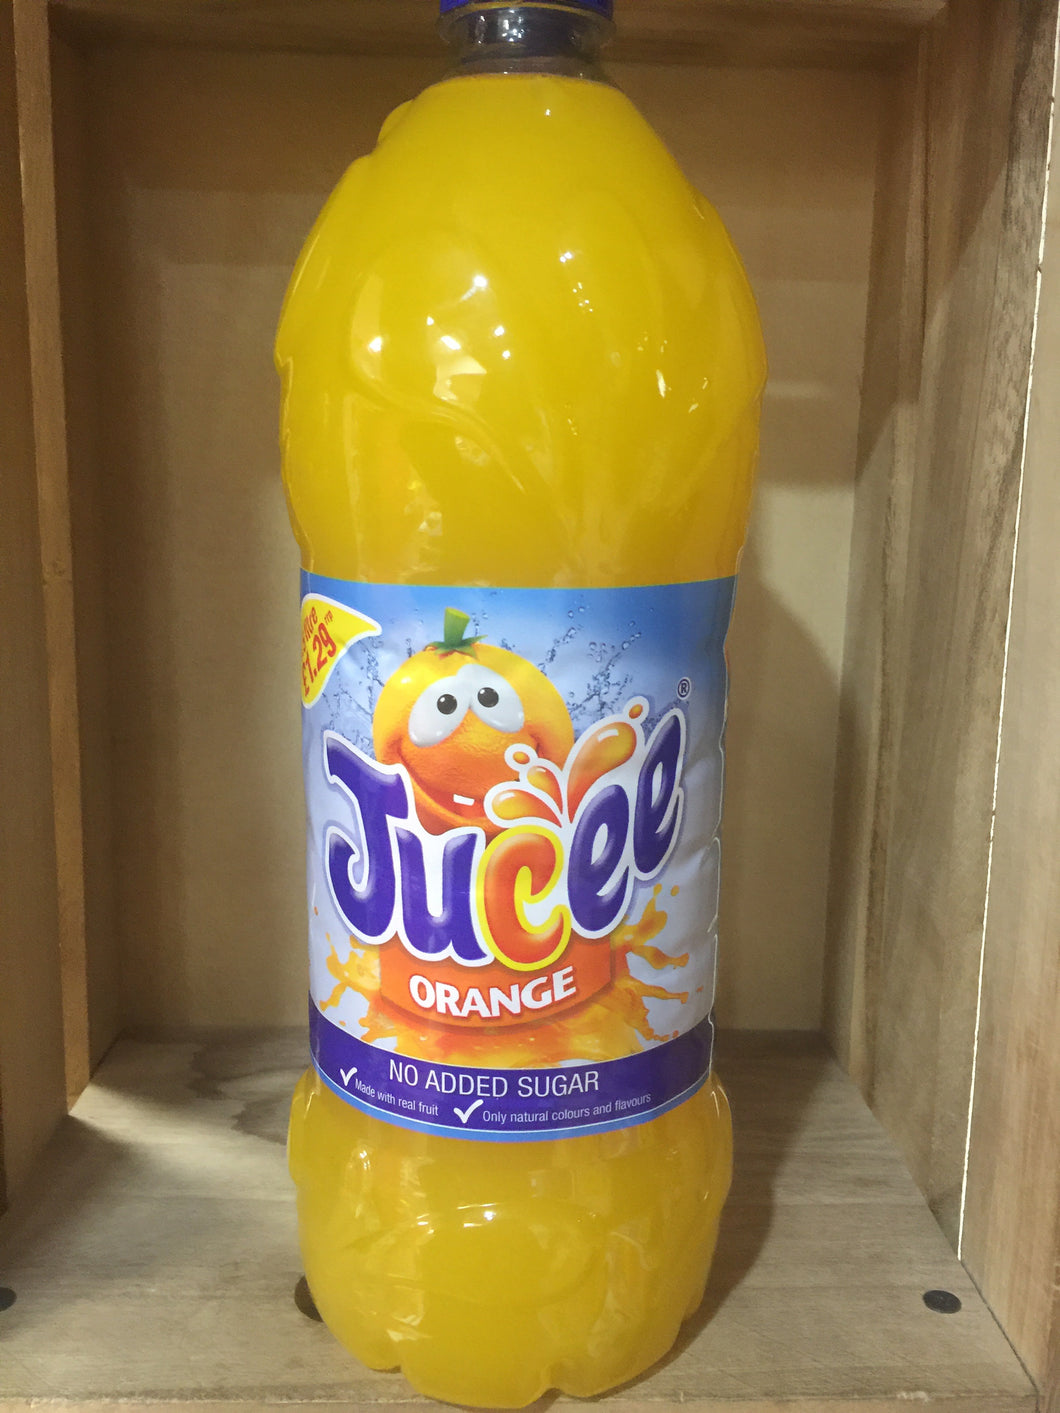 Jucee Orange No Added Sugar 1.5L